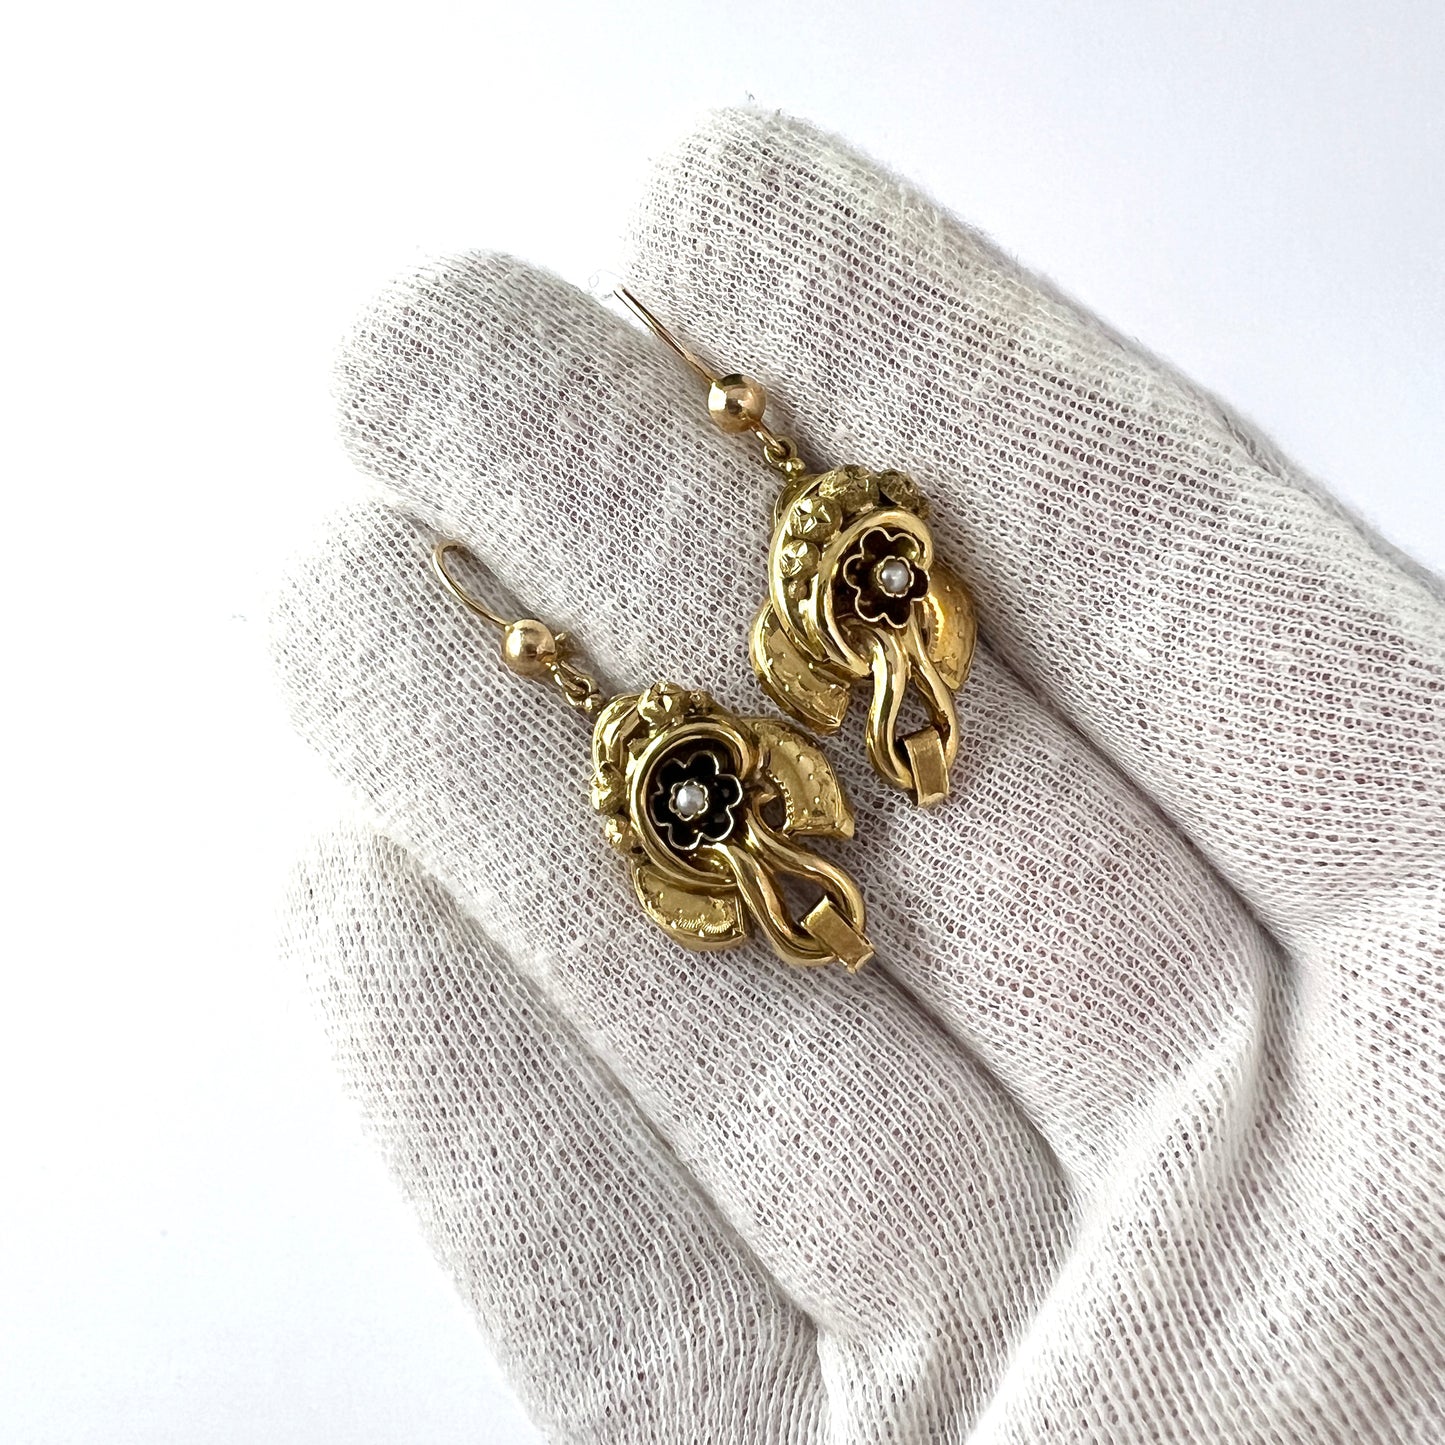 G Dahlgren, Sweden 1873. Antique Victorian 18k Gold Earrings.